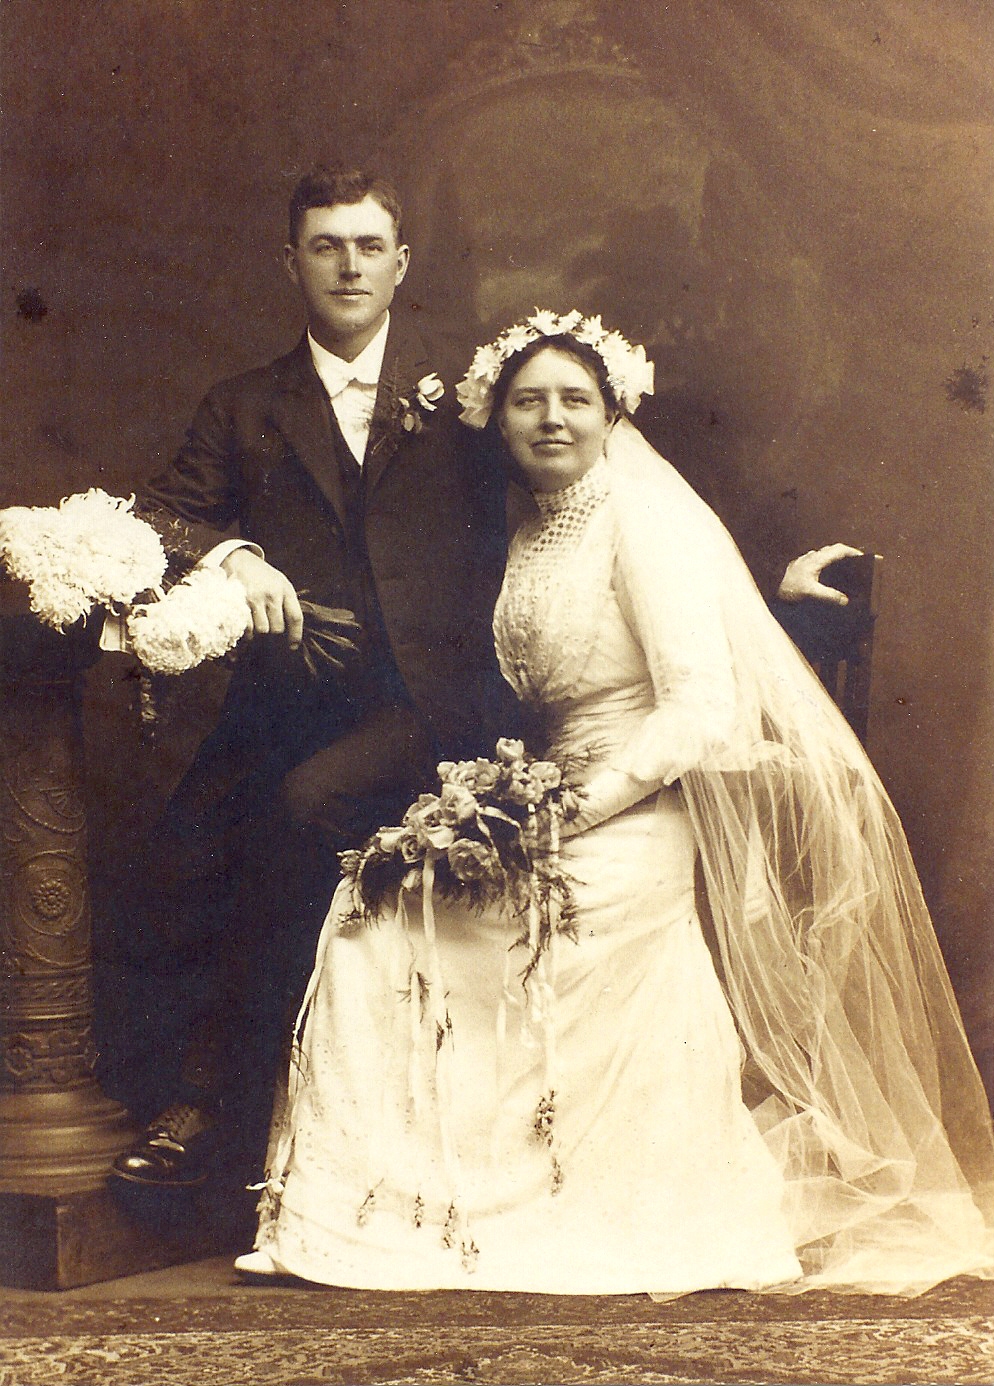 grandmother's wedding dress restoration and preservation